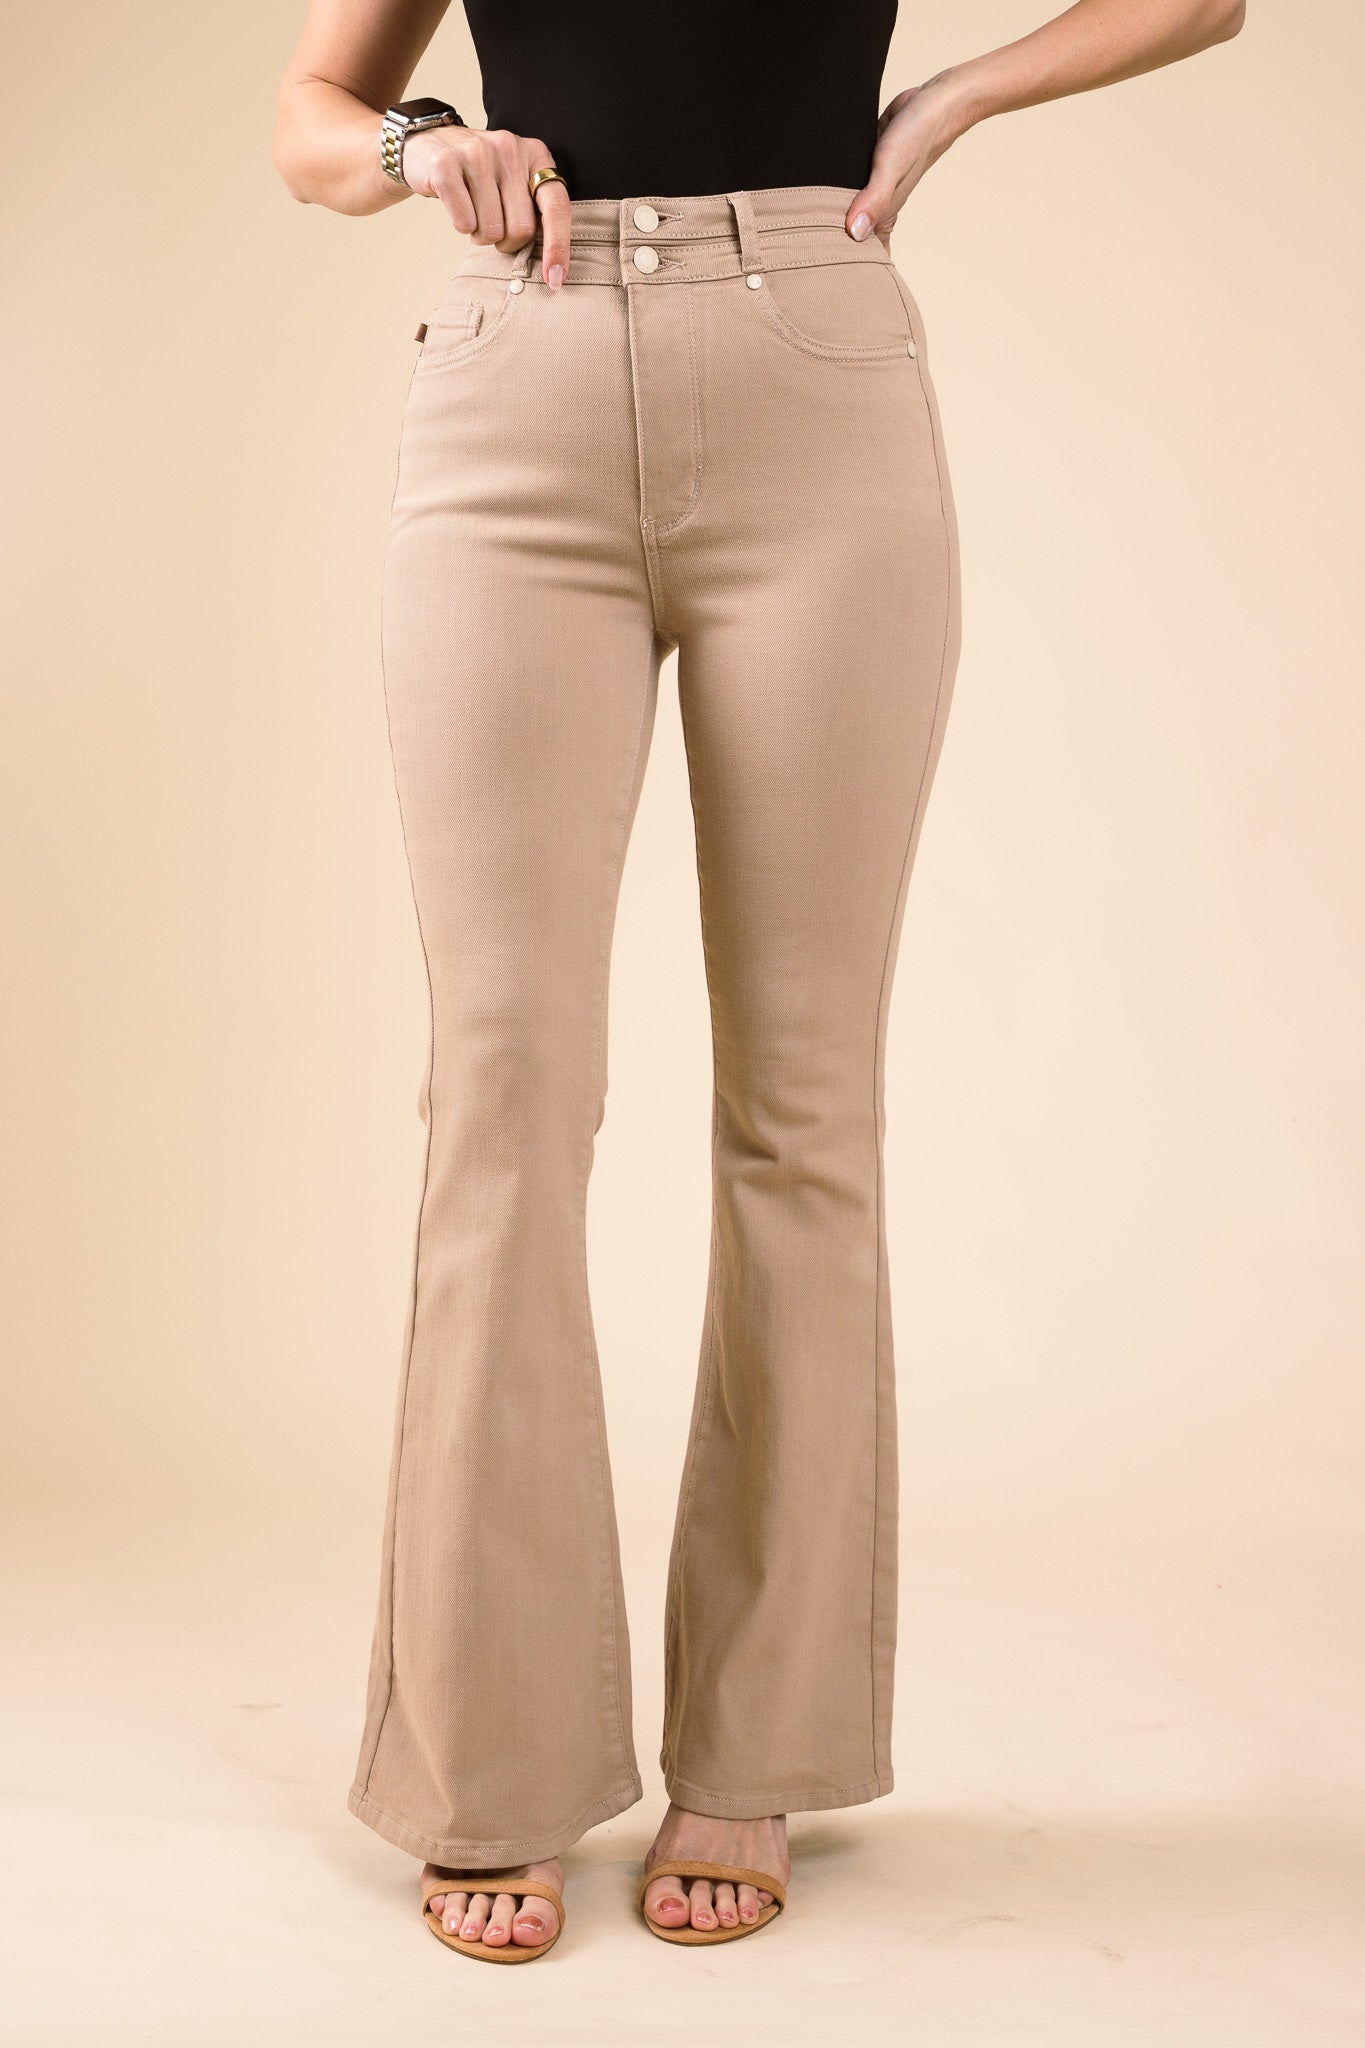 Remi Khaki Control Top Flare Jeans - FINAL SALE